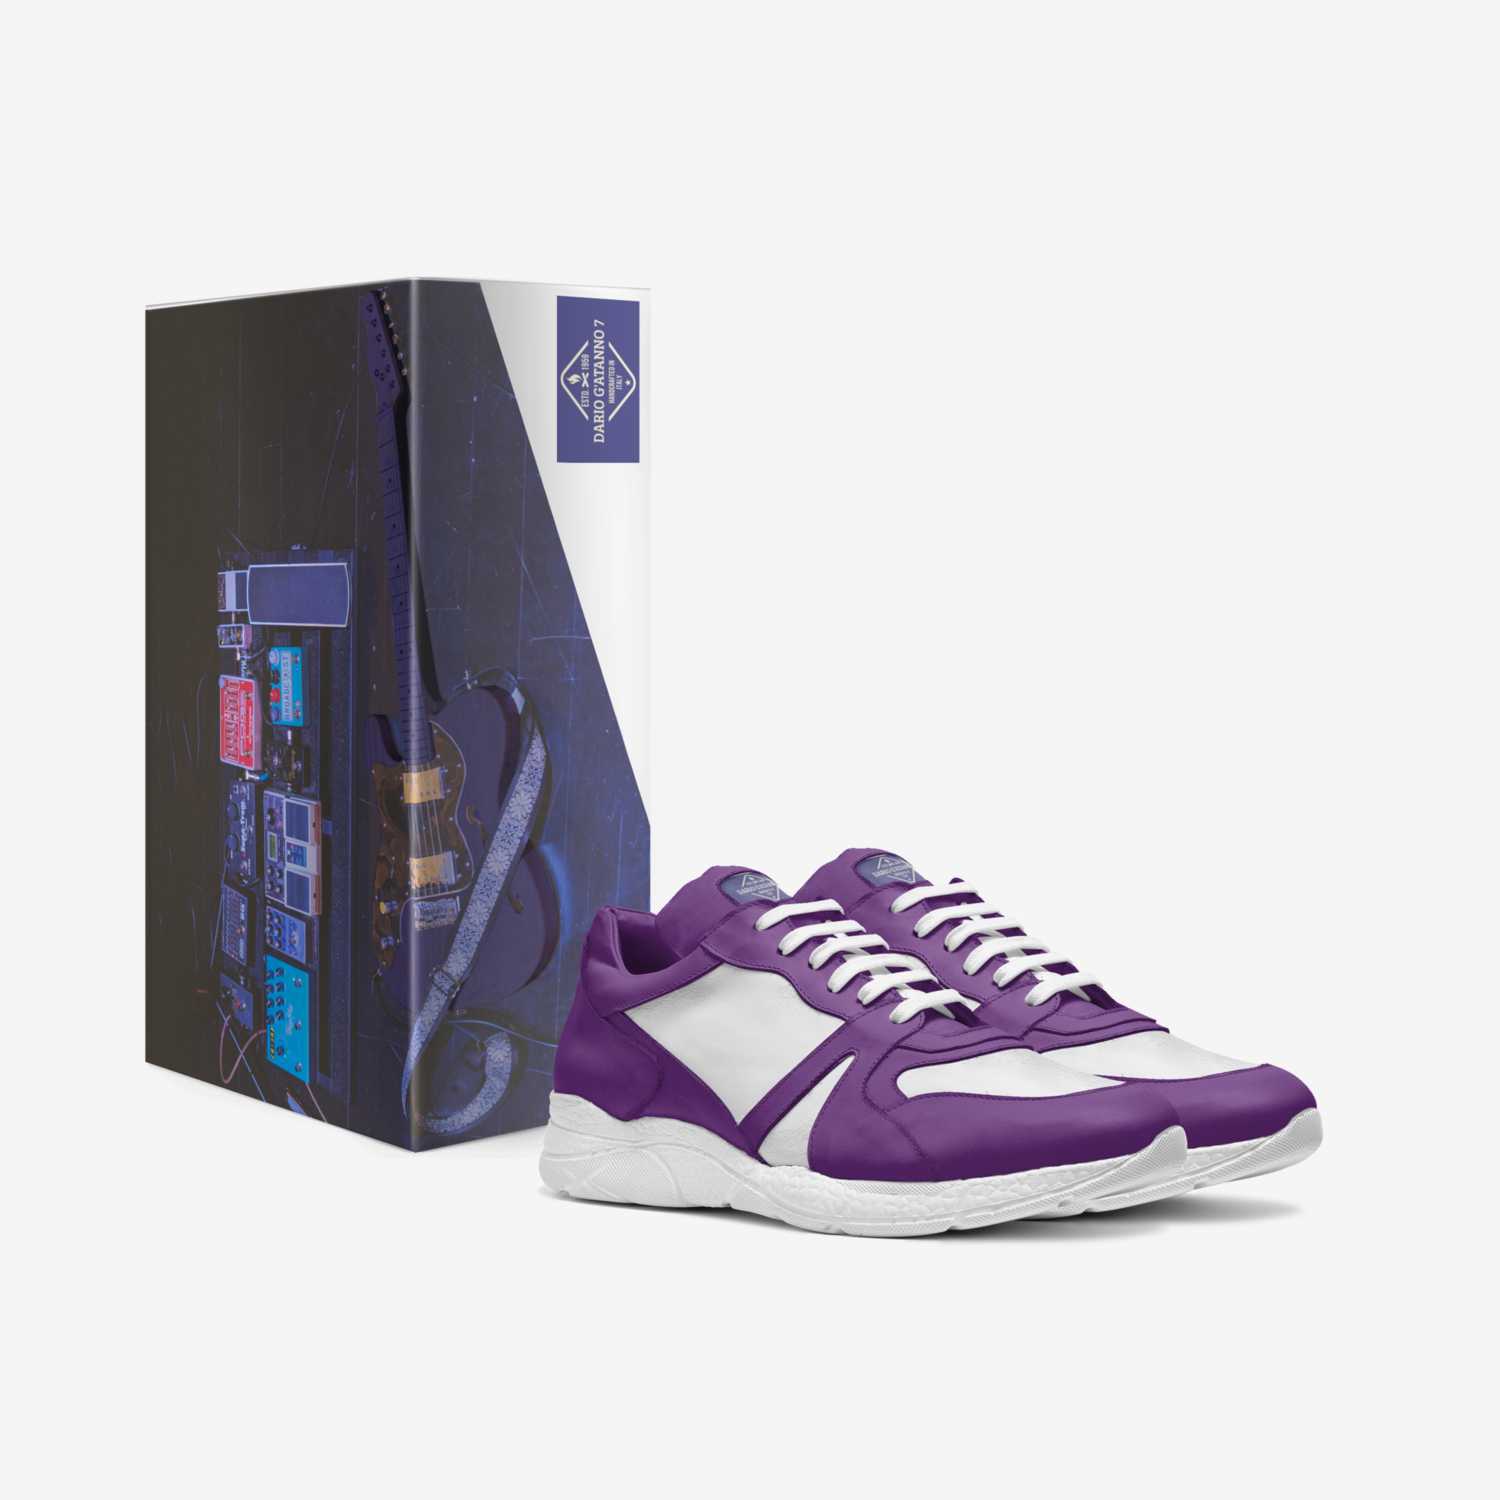 Dario G'Atanno 7 custom made in Italy shoes by Darel Wesley | Box view